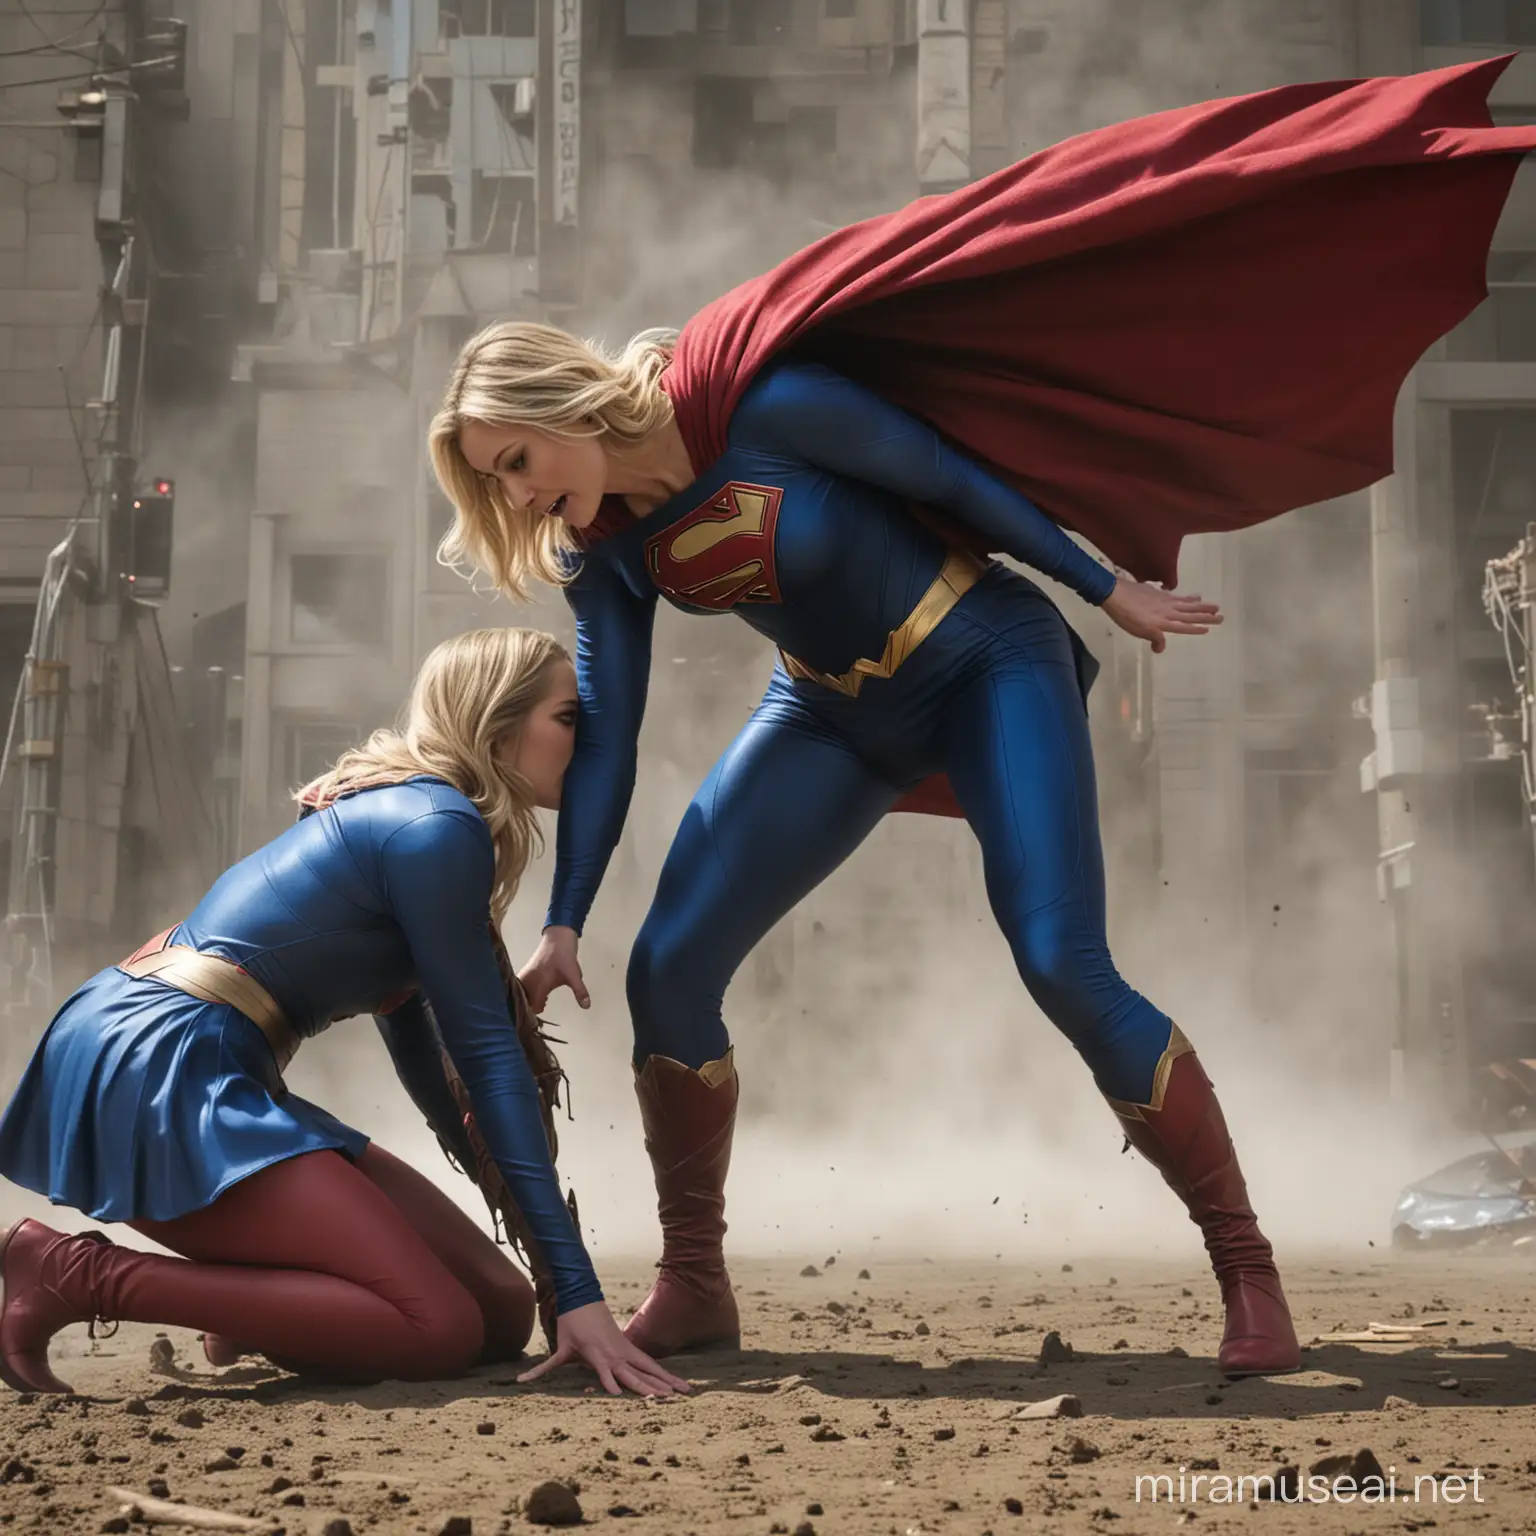 Supergirl, dressed as Superman, Huge arachnid engulfing, swallowing Supergirl Giant arachnid looming over Supergirl, leaning over, hunched over Supergirl